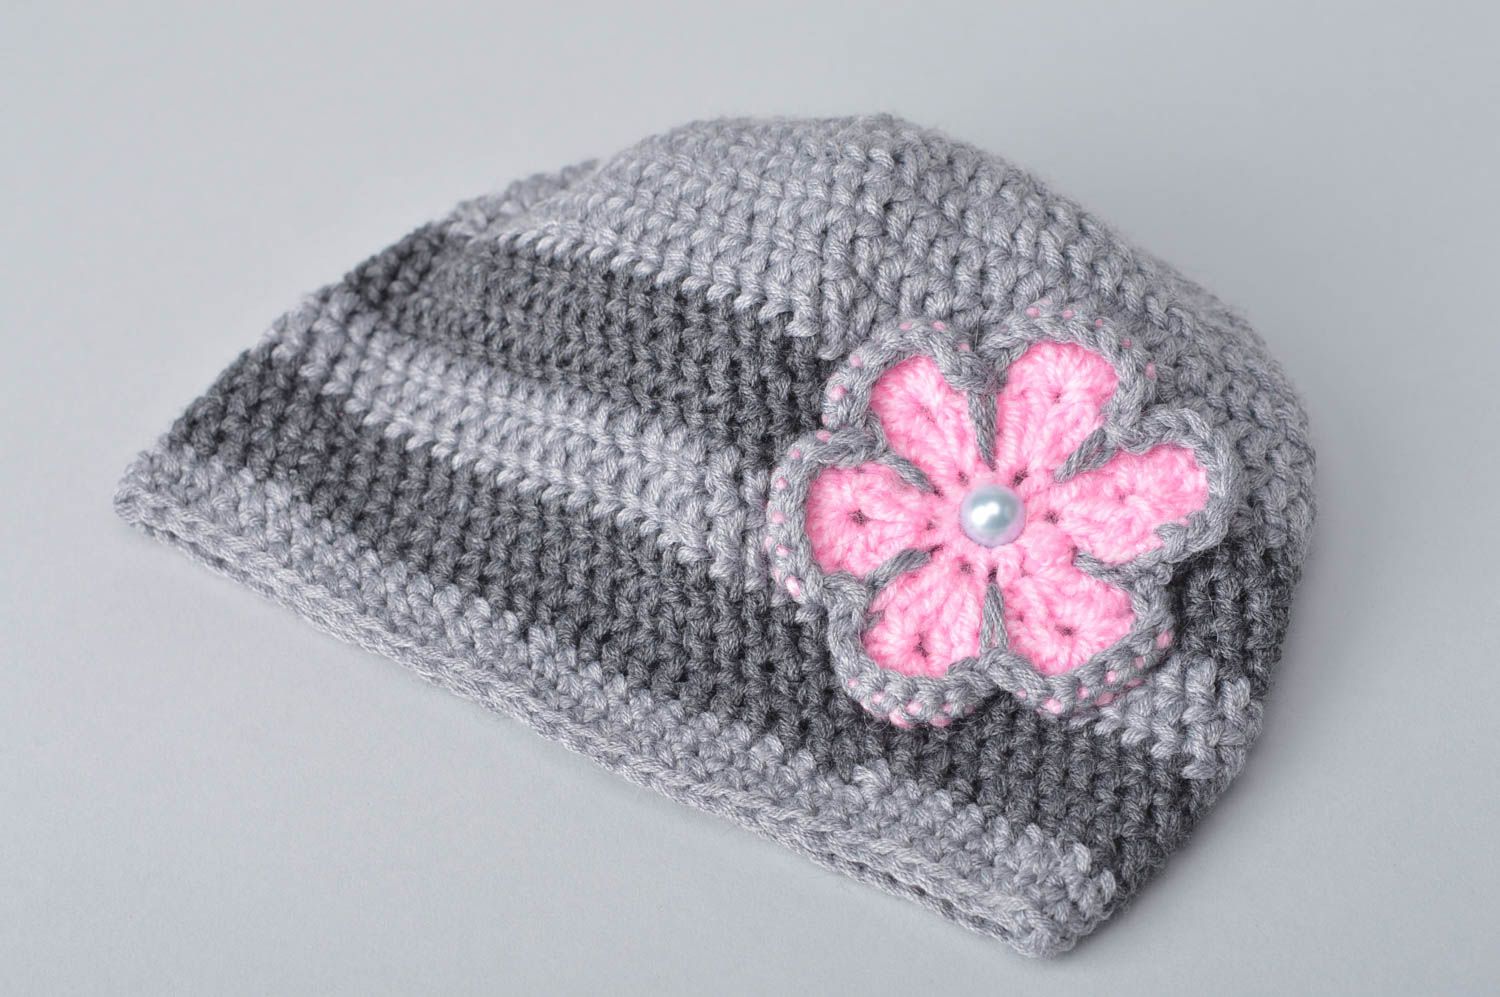 Handmade warm hat crochet baby hat girls accessories hats for kids kids gifts photo 2